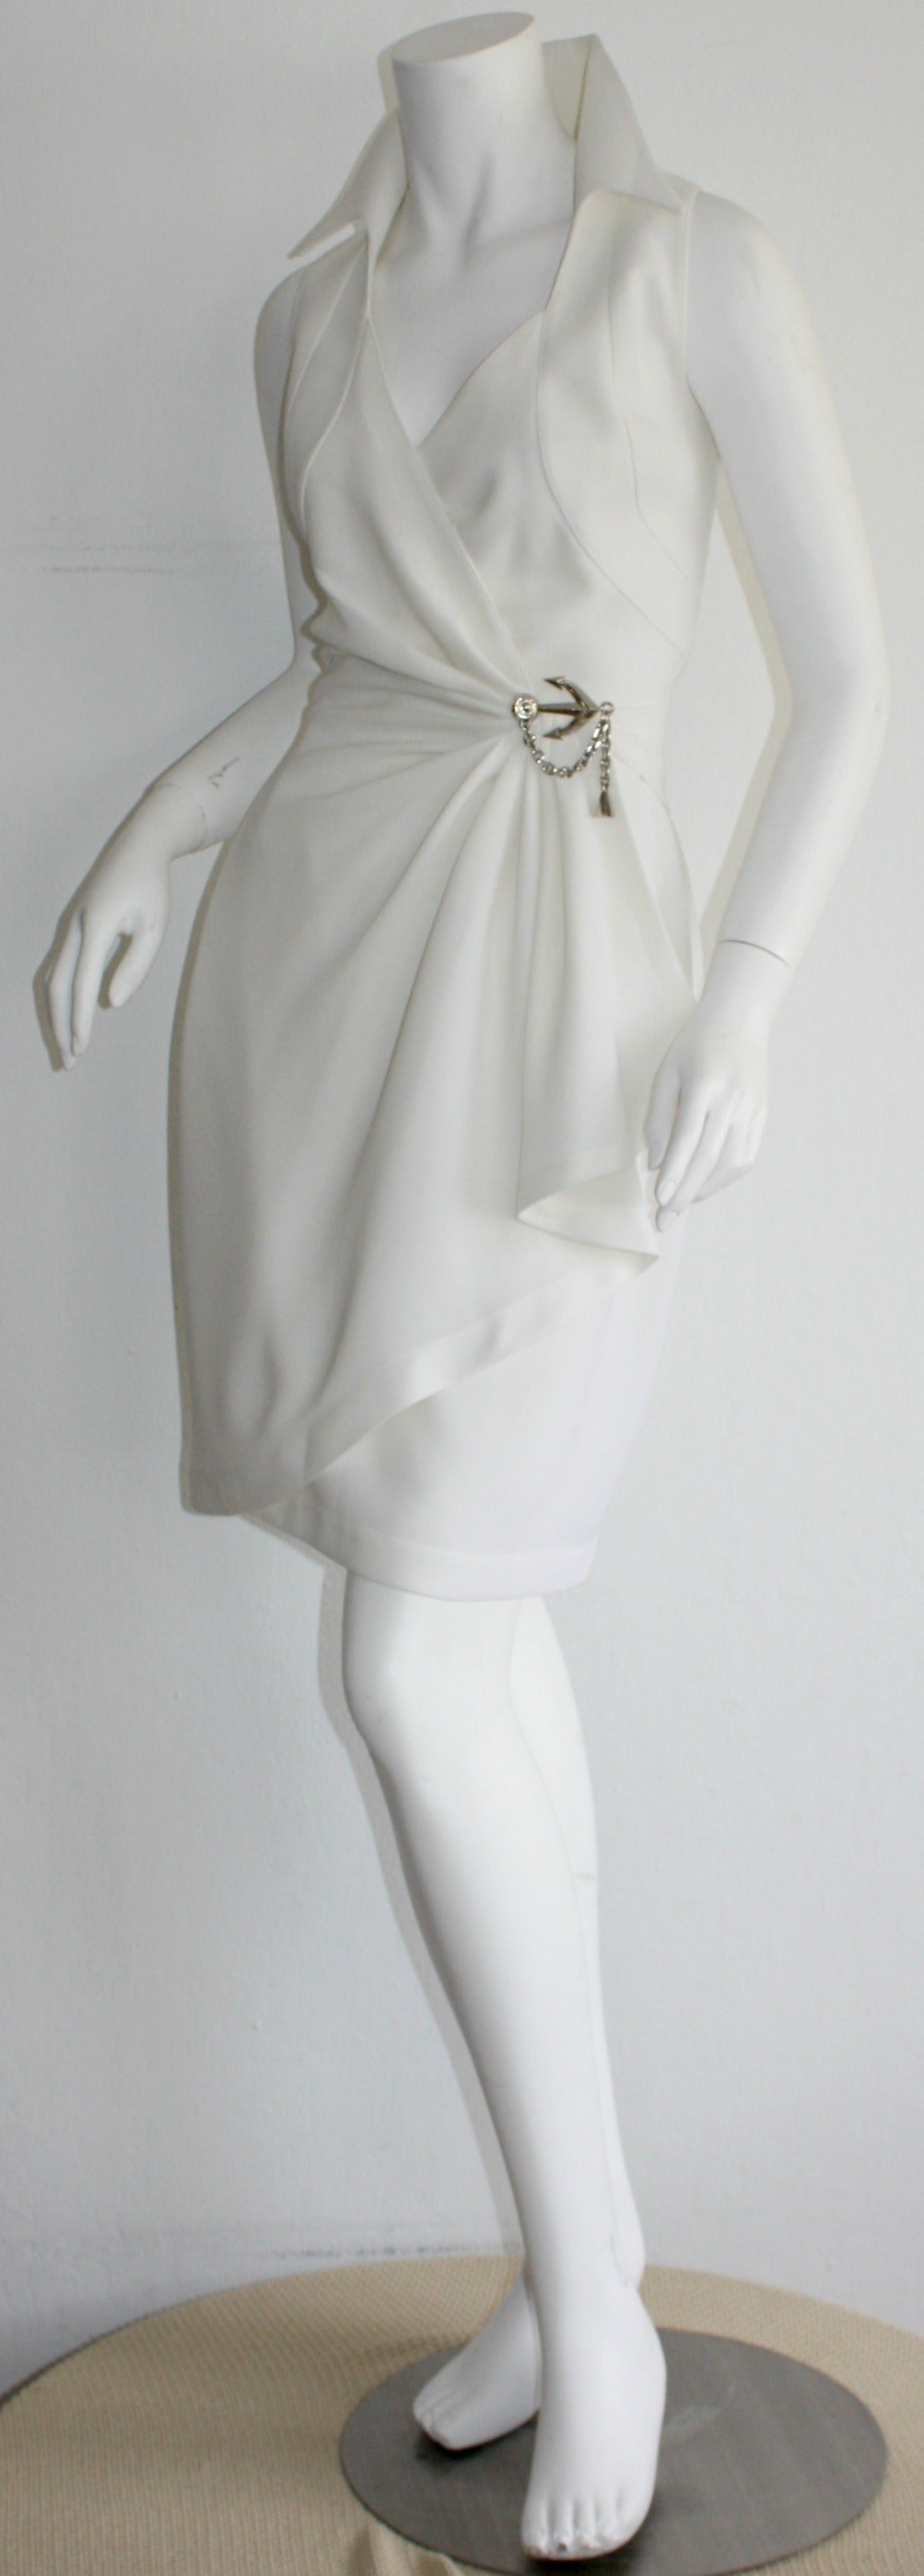 thierry mugler white dress